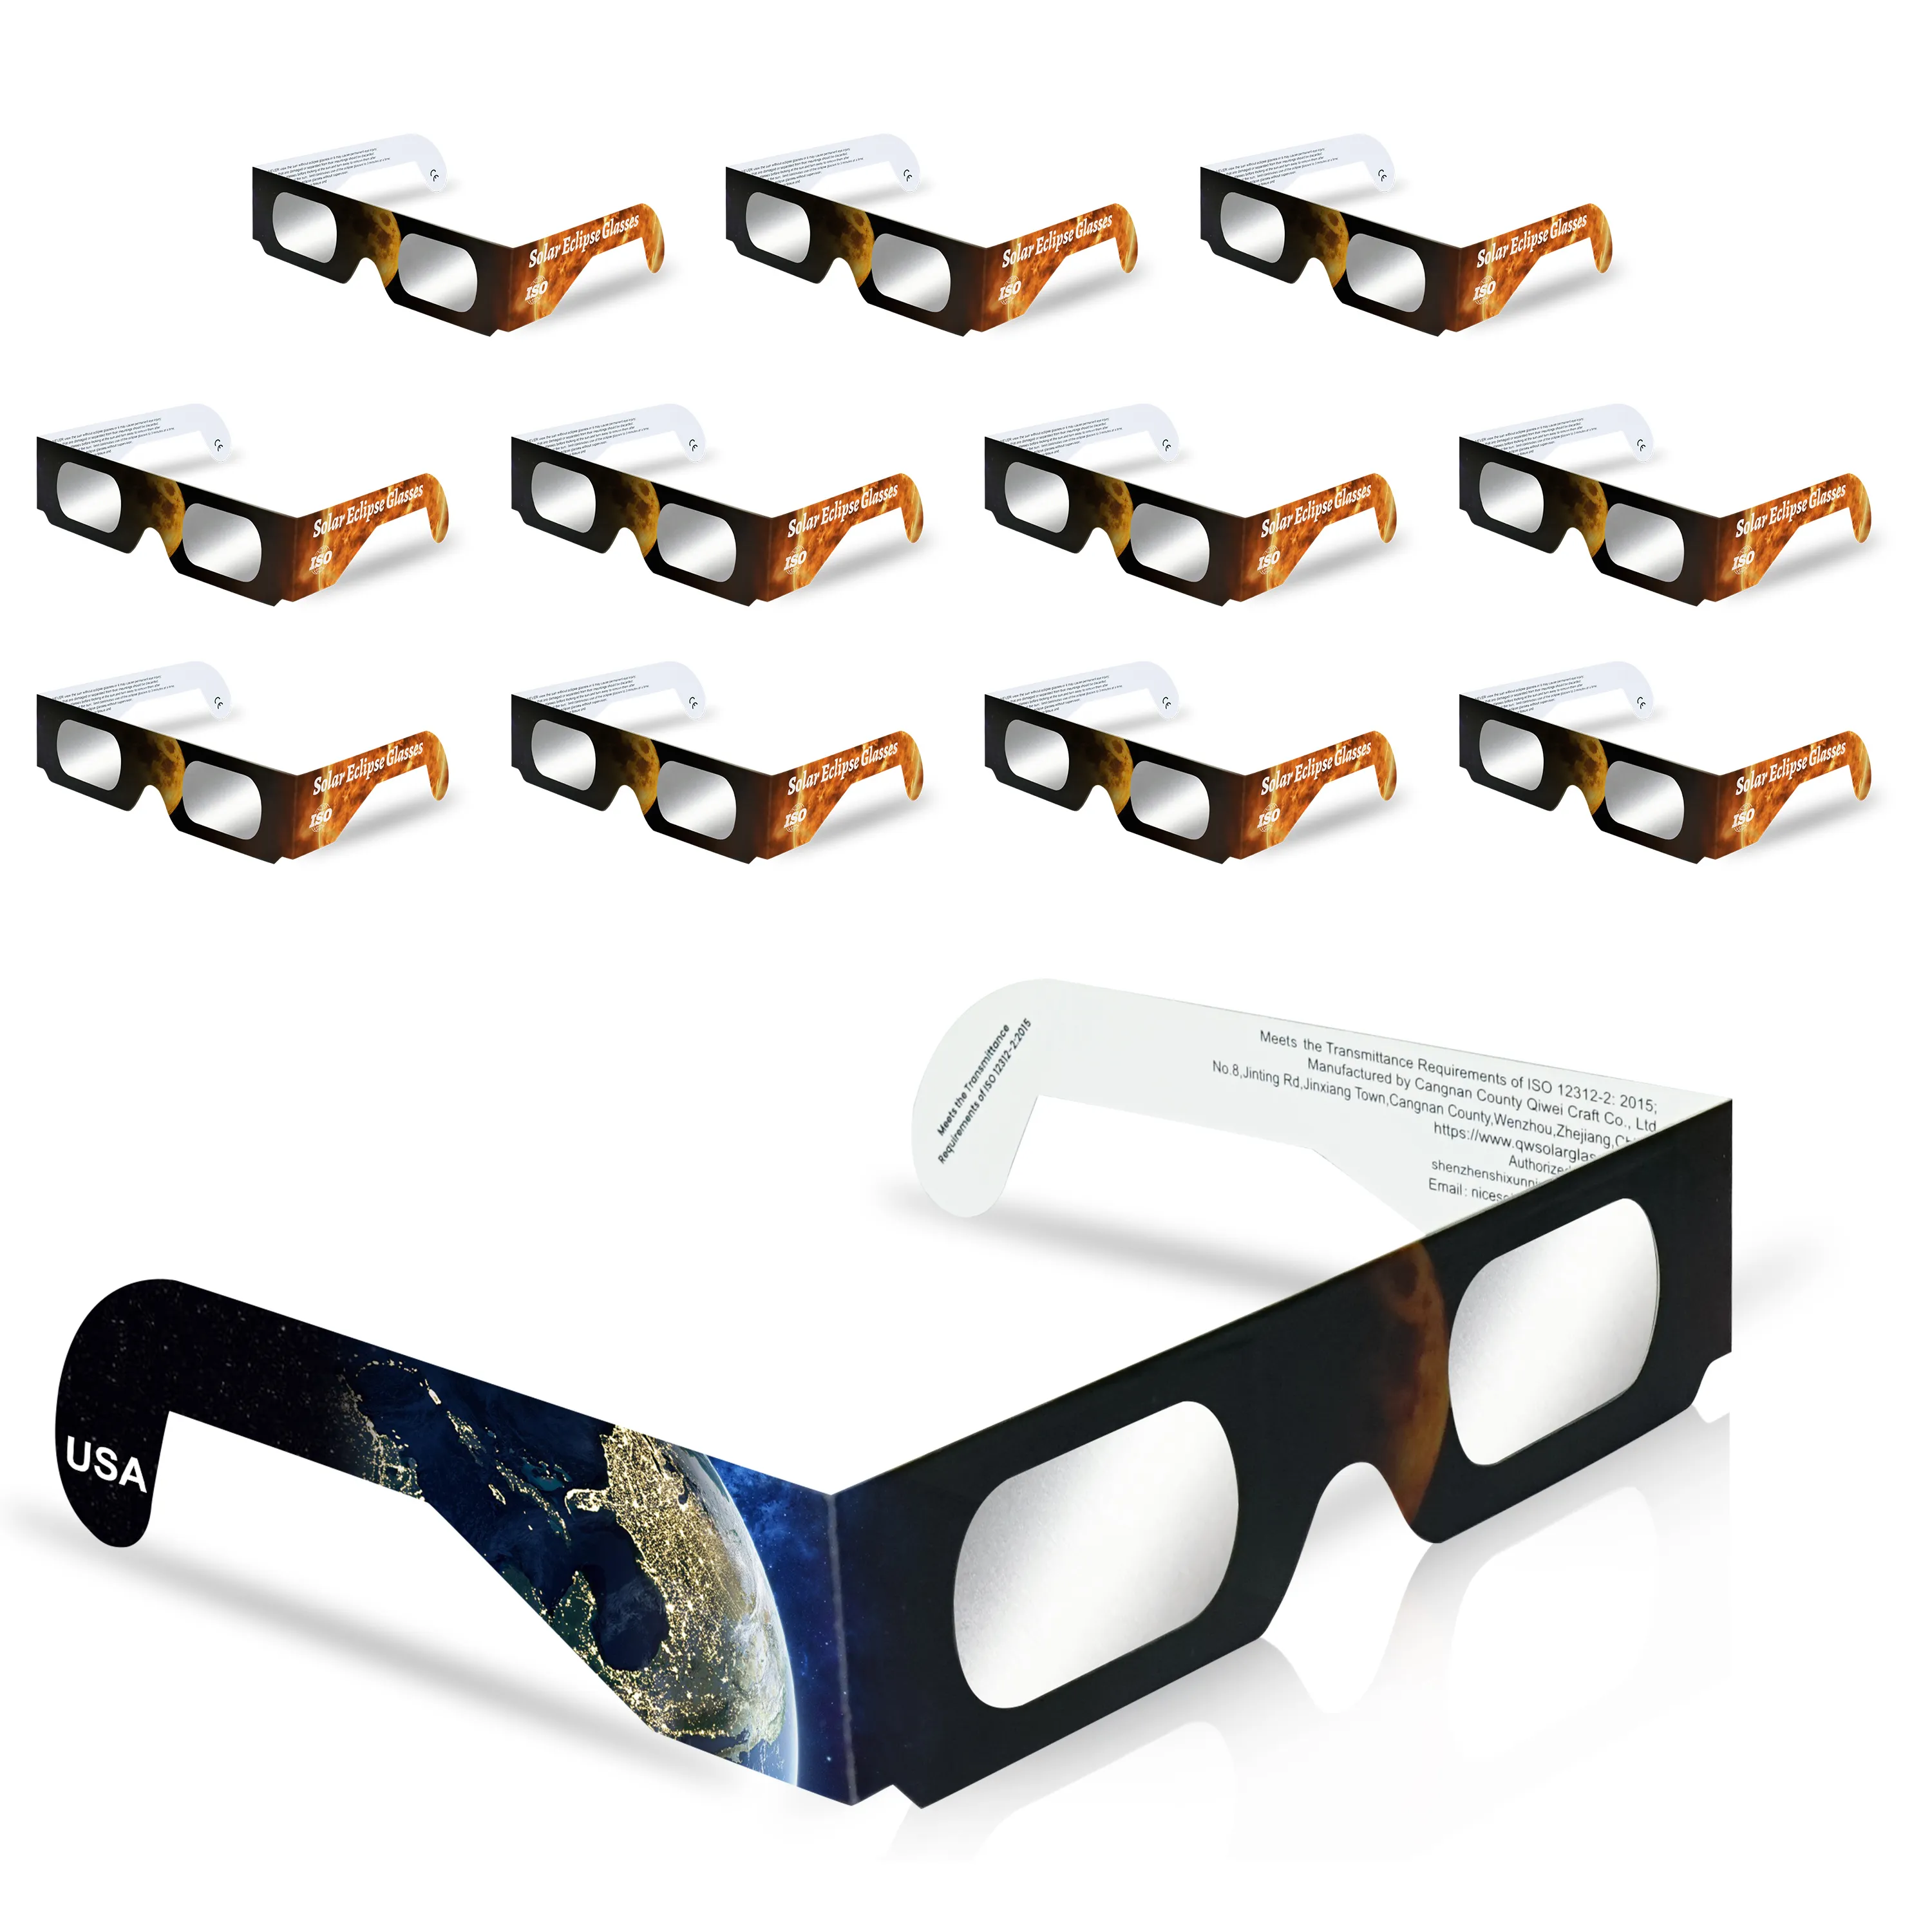 Paquete de 12 gafas de eclipse solar fabricadas por fábrica aprobada por AAS, sombra de eclipse con certificación CE e ISO para visualización directa del sol